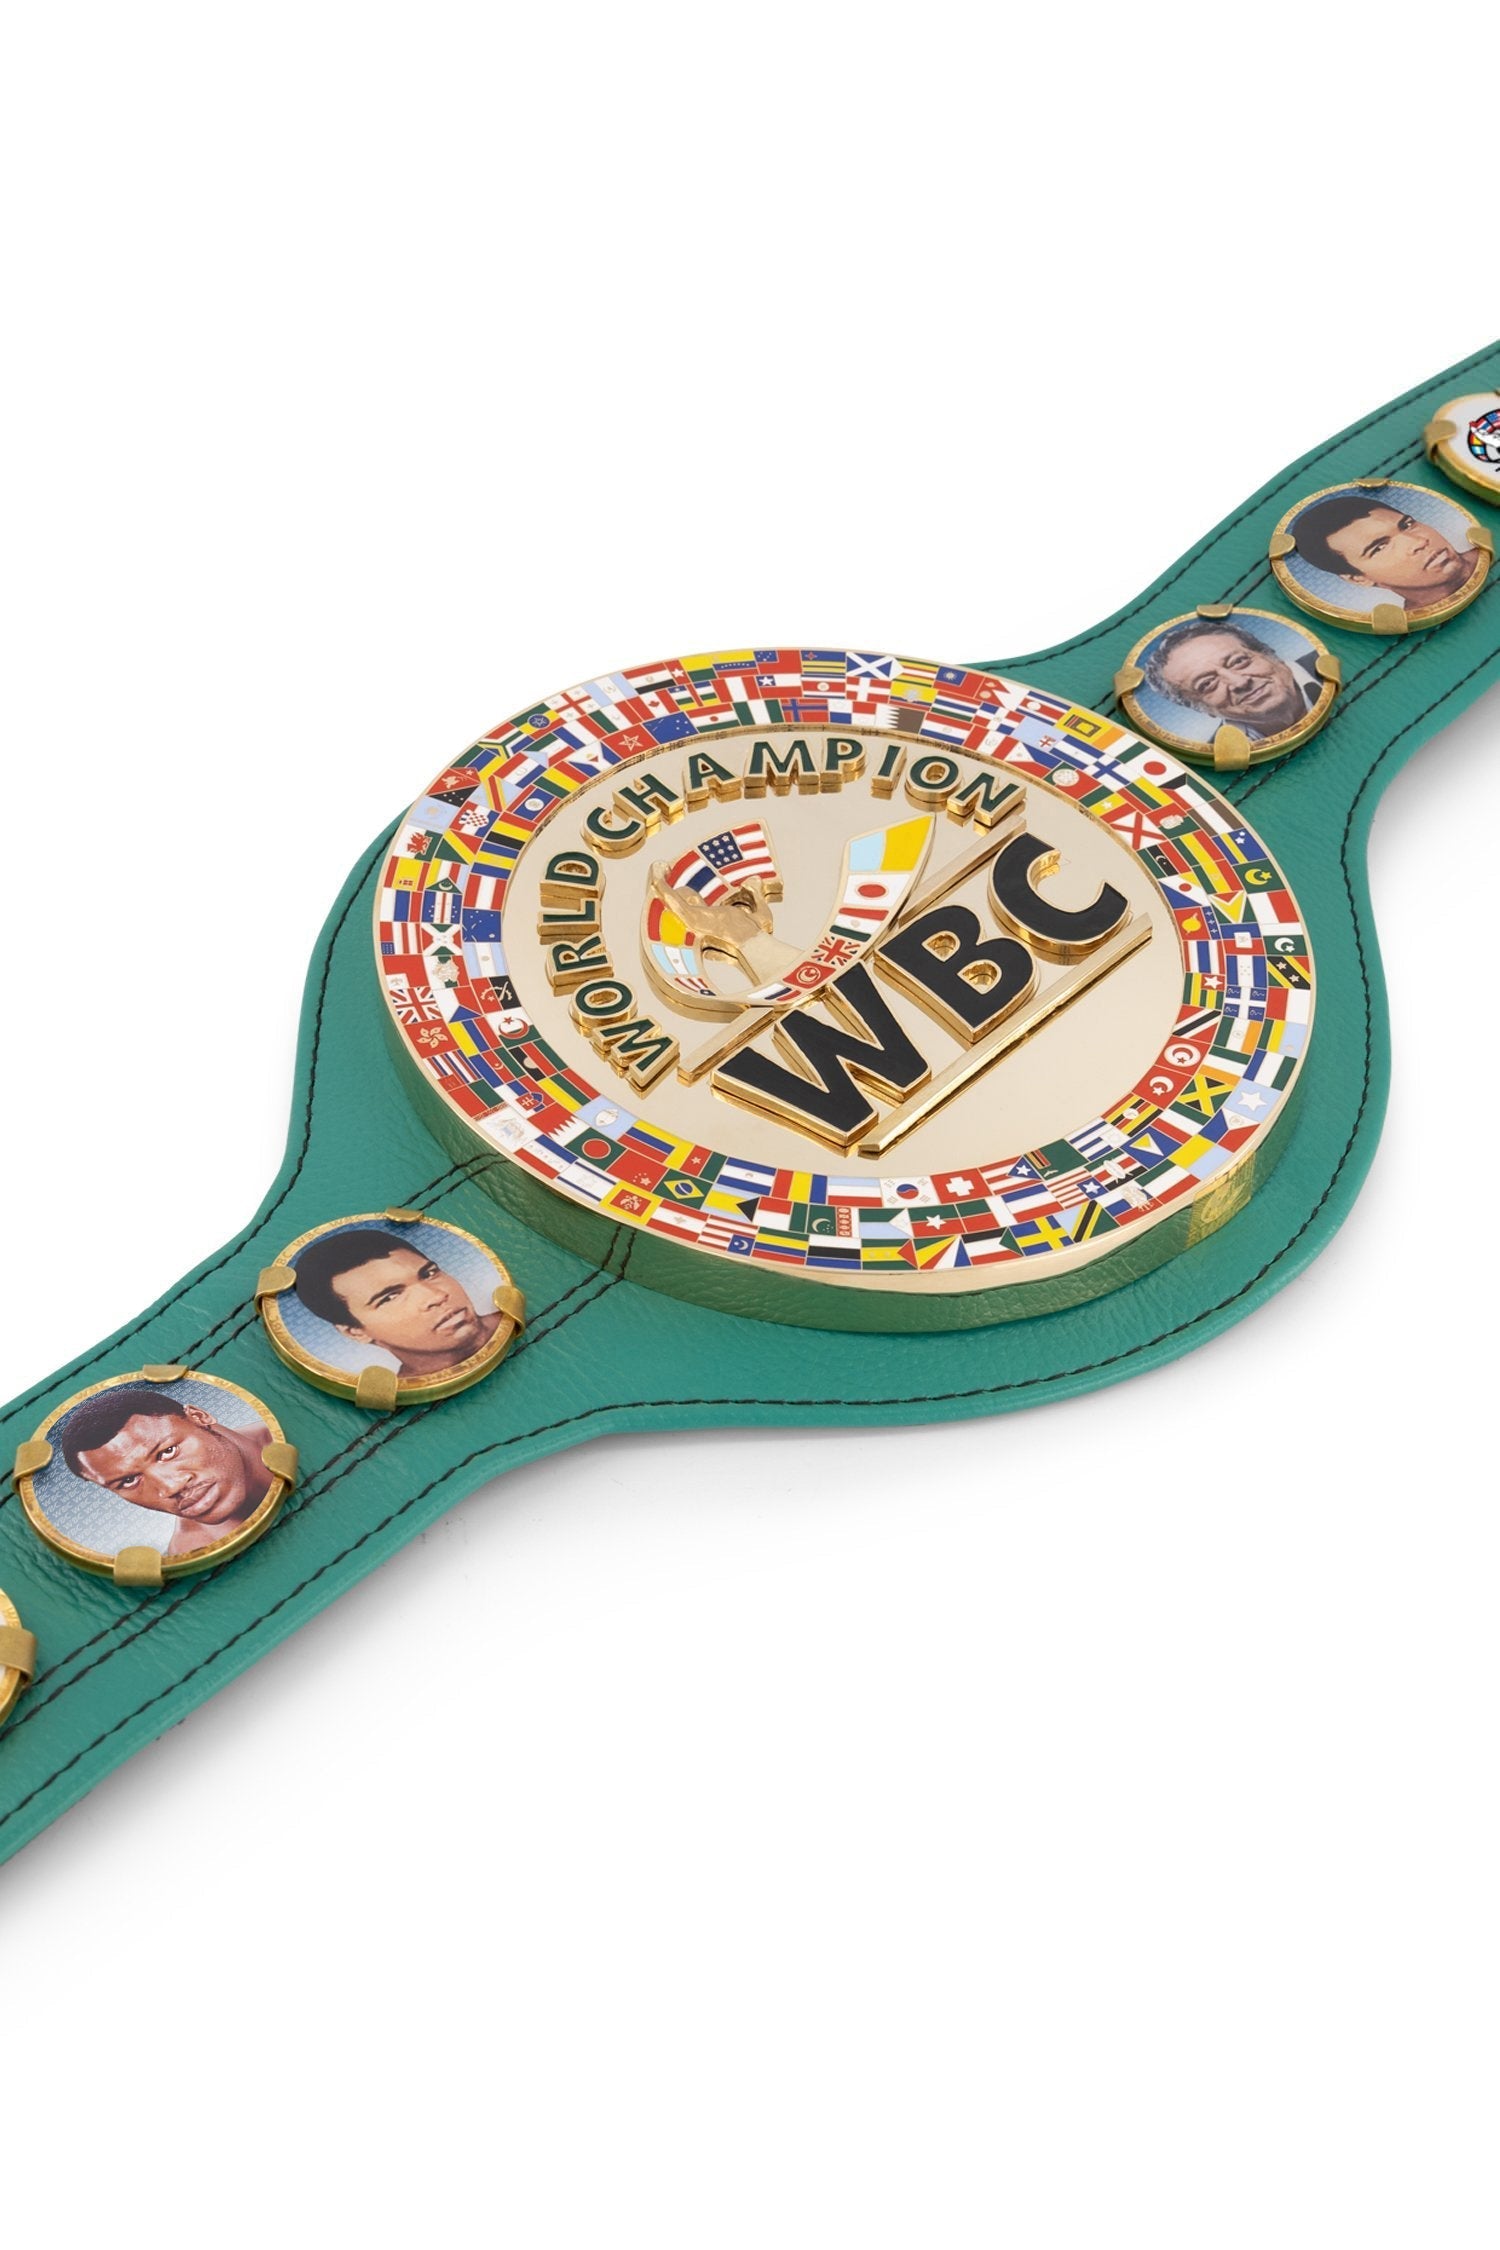 WBC Store Replica Belts WBC Championship Belt  "Historic Fights" Muhammad Ali vs. Joe Frazier